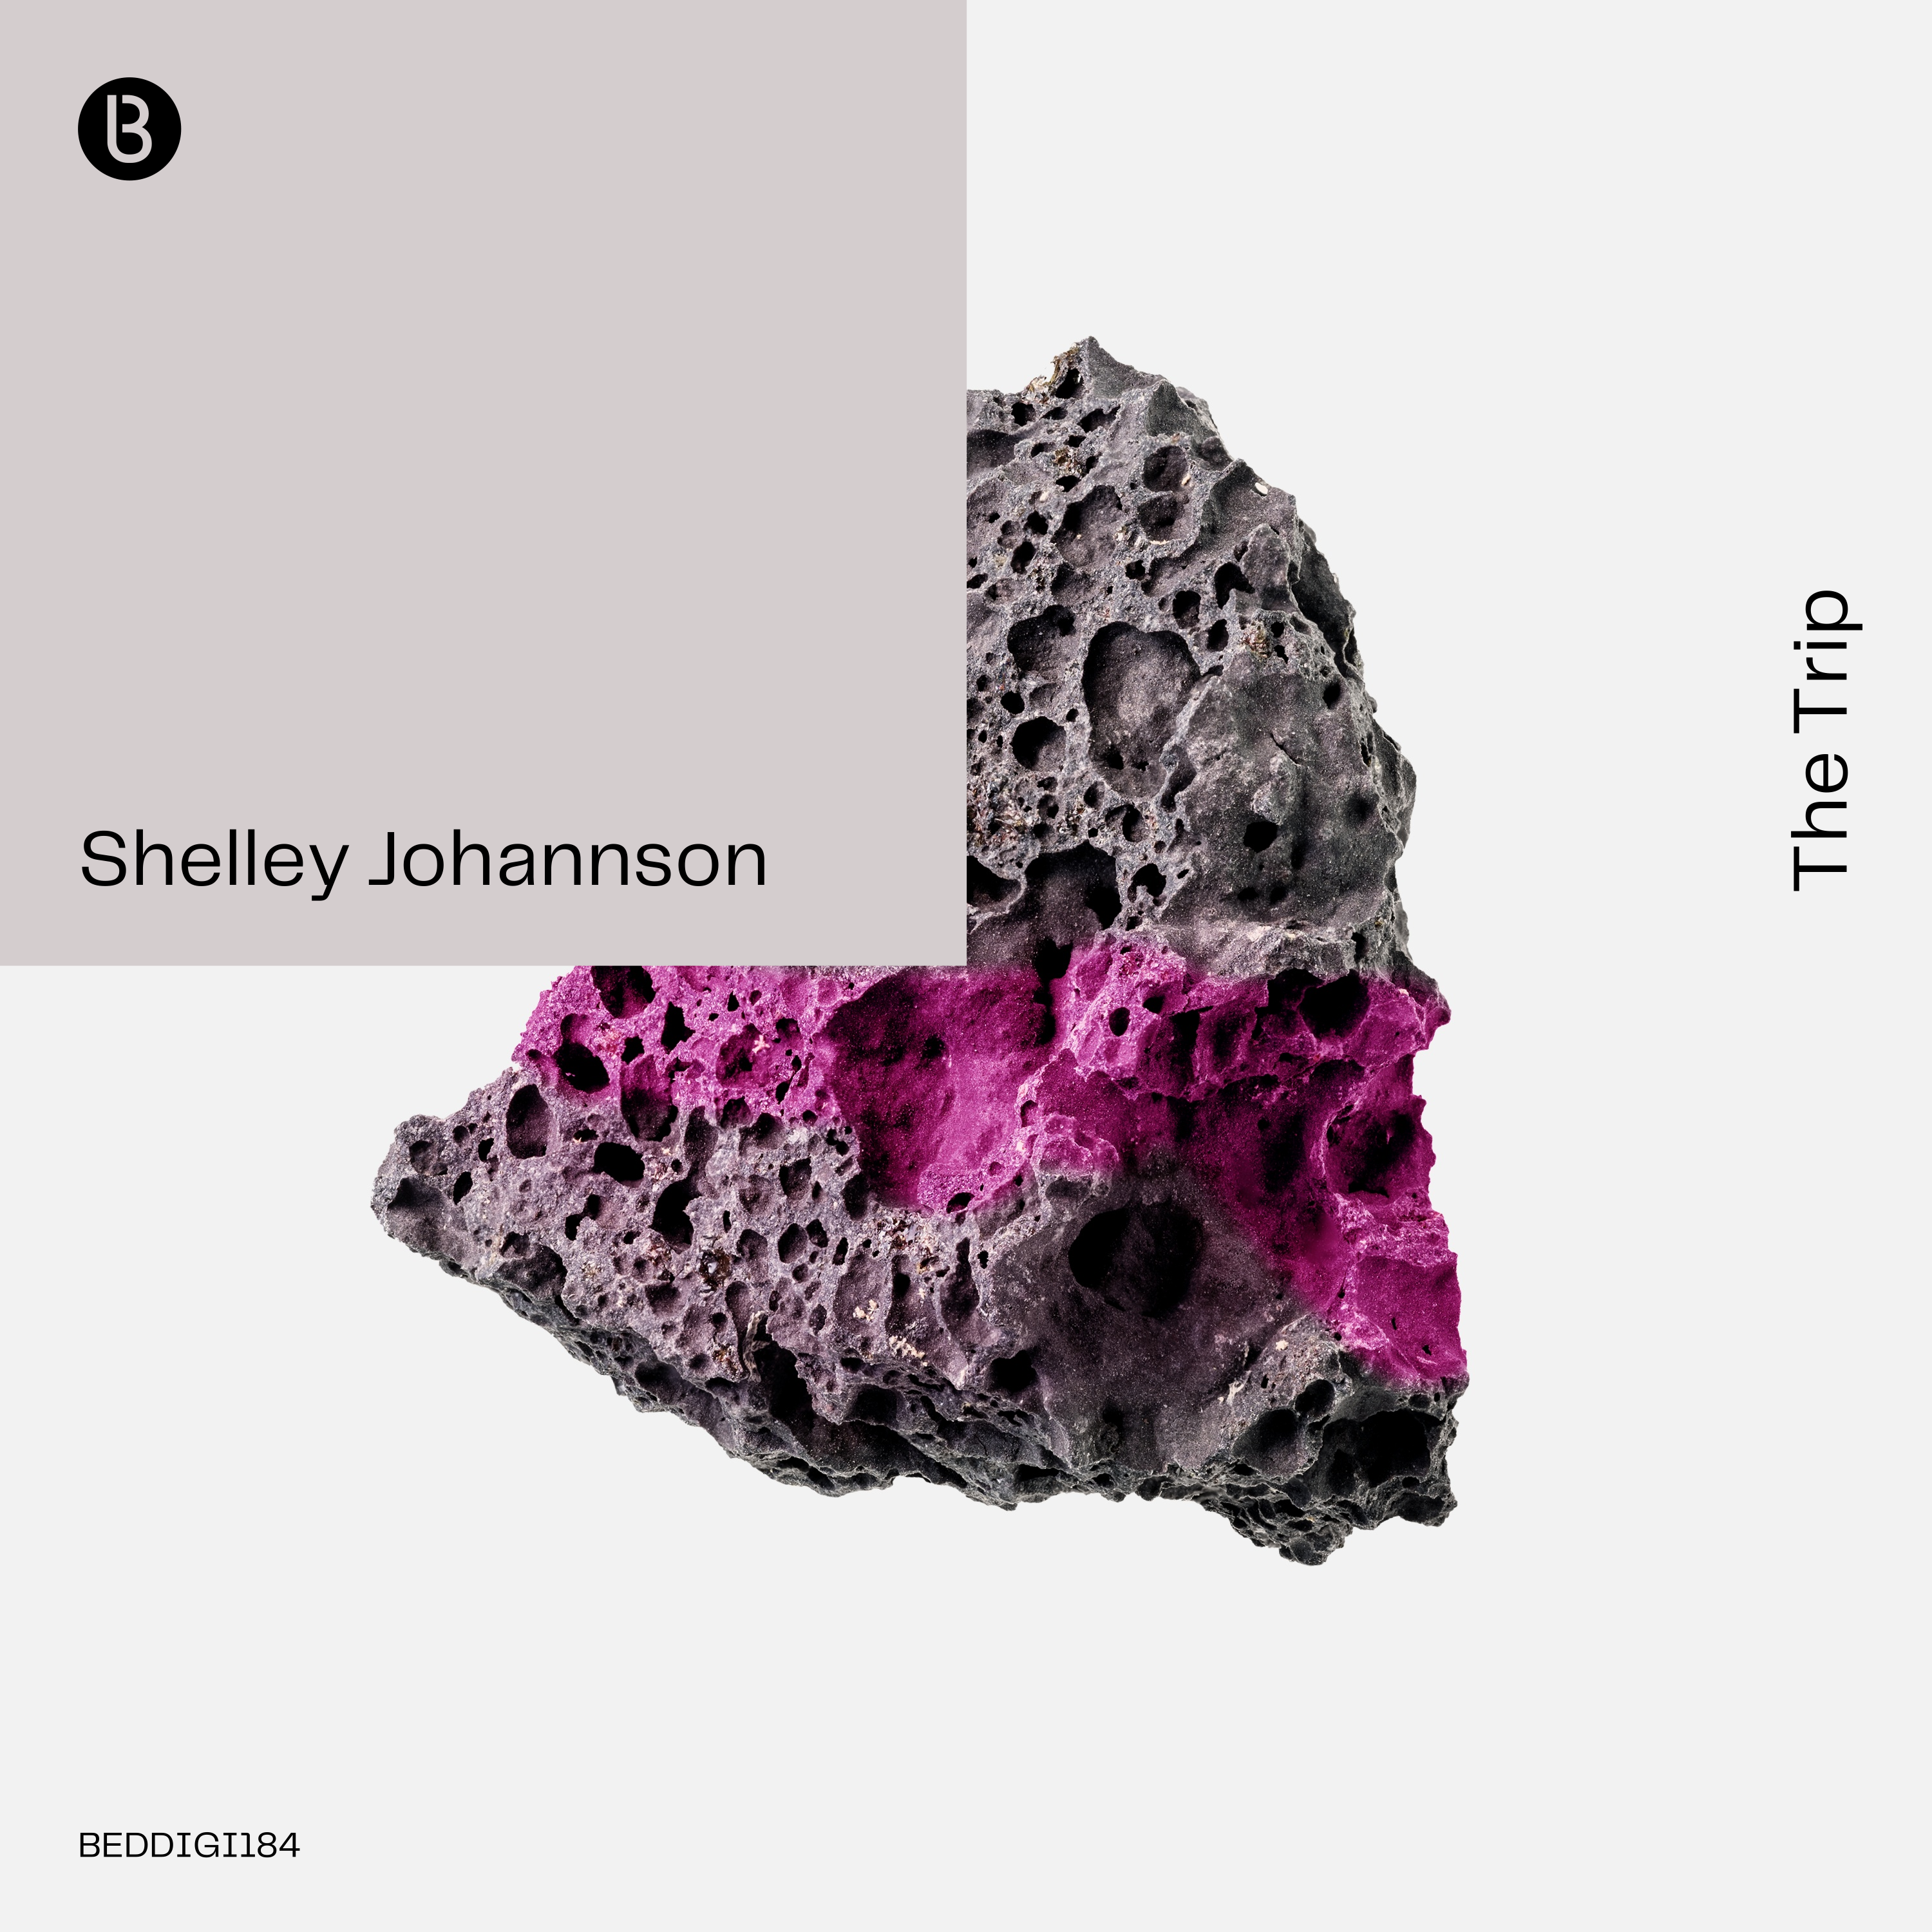 Shelley Johannson productrice Techno du Canada sort son EP The Trip sur le label Bedrocks records de John Digweed